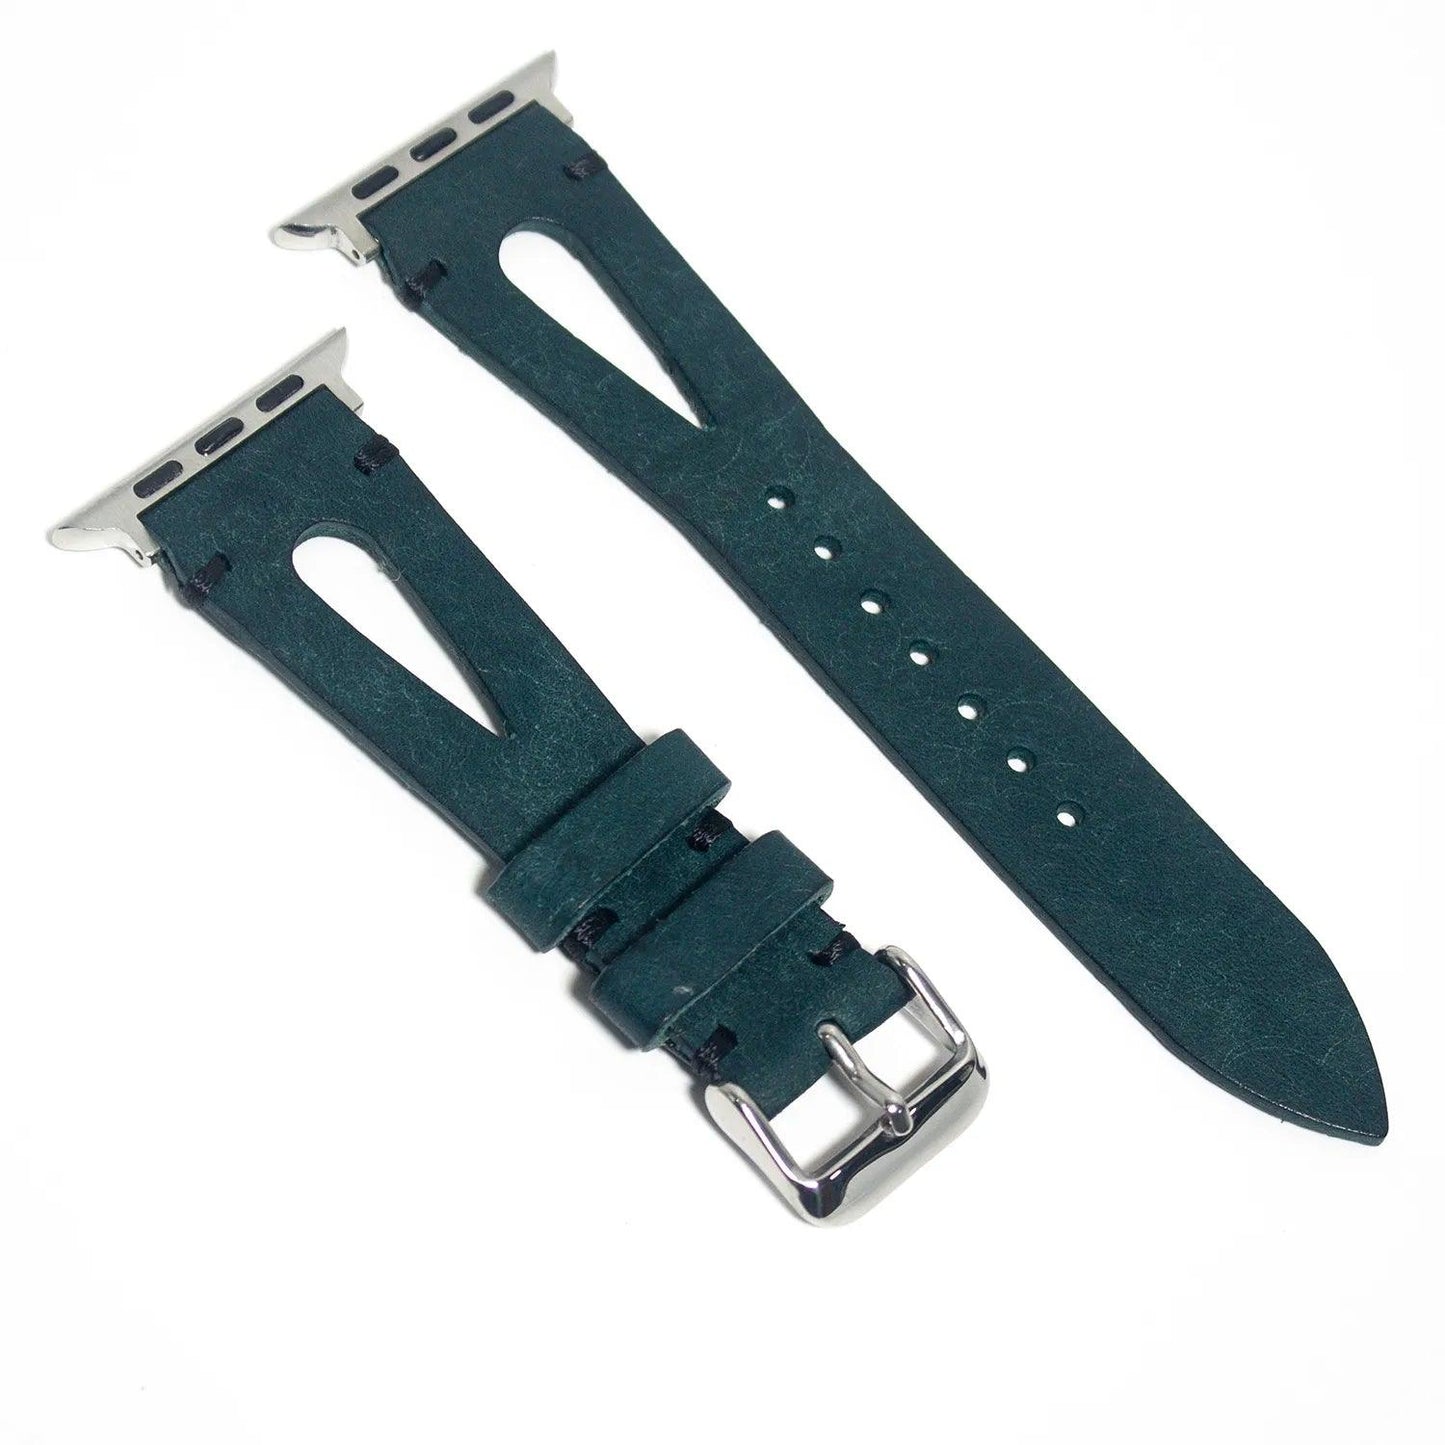 Luxurious leather Apple Watch band in dark cyan, showcasing premium Pueblo leather and Italian craftsmanship.